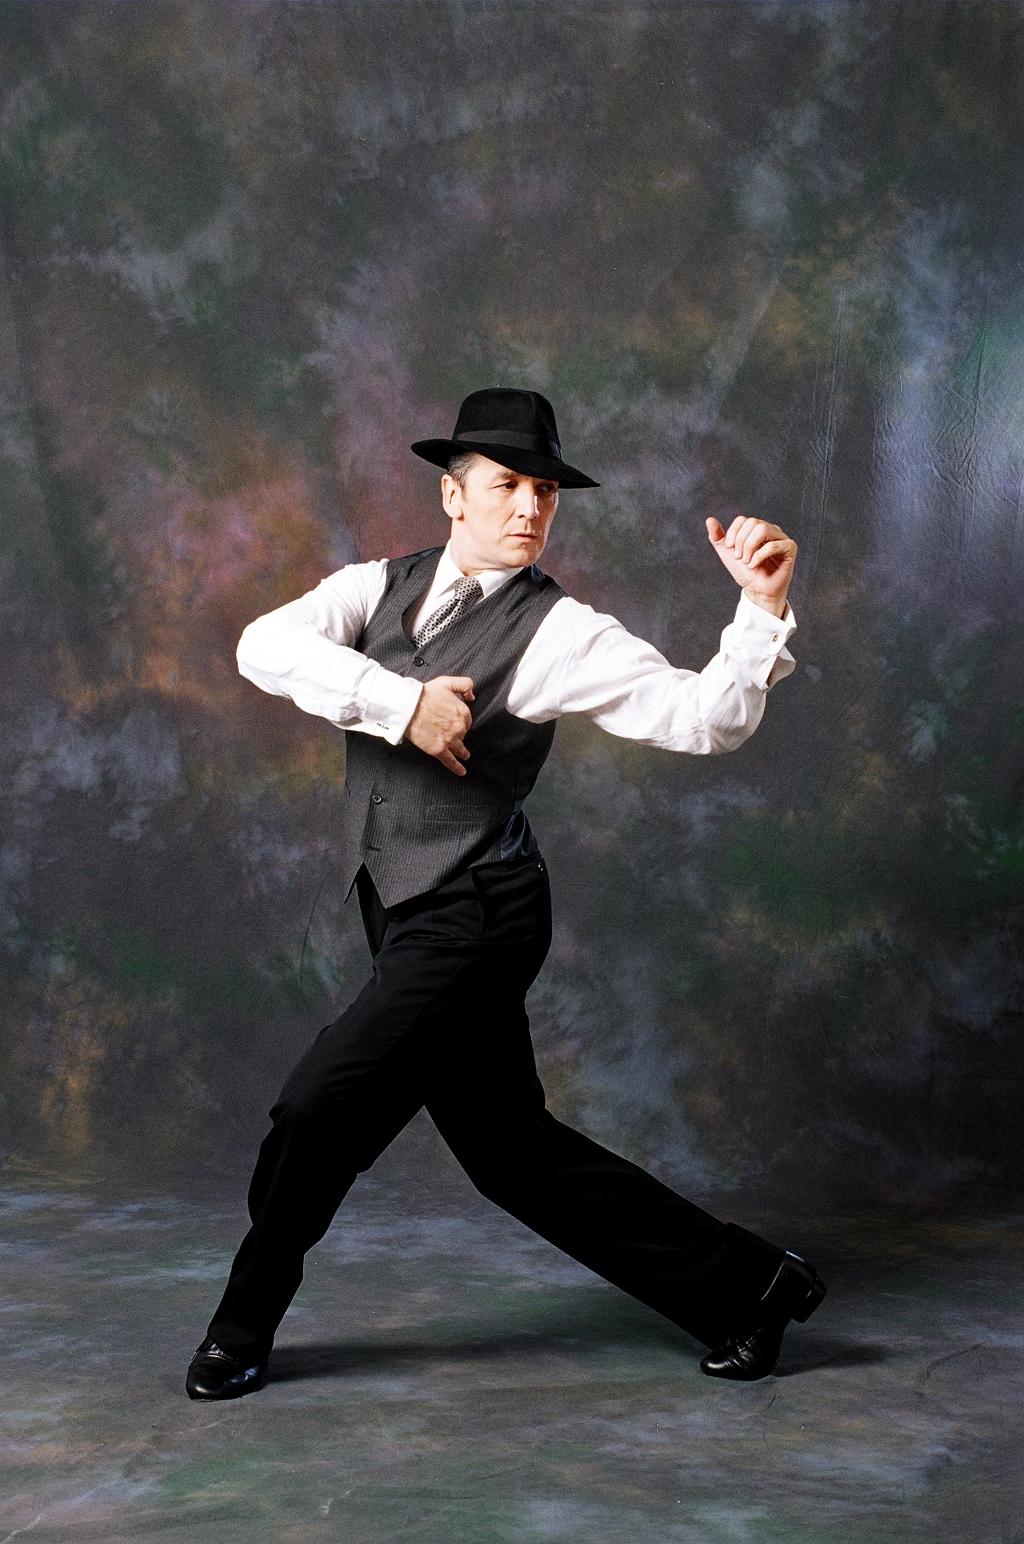 Мужик пляшет. Танец мужчина. Танцующий мужчина. Парень танцует. Парень в шляпе танцует.